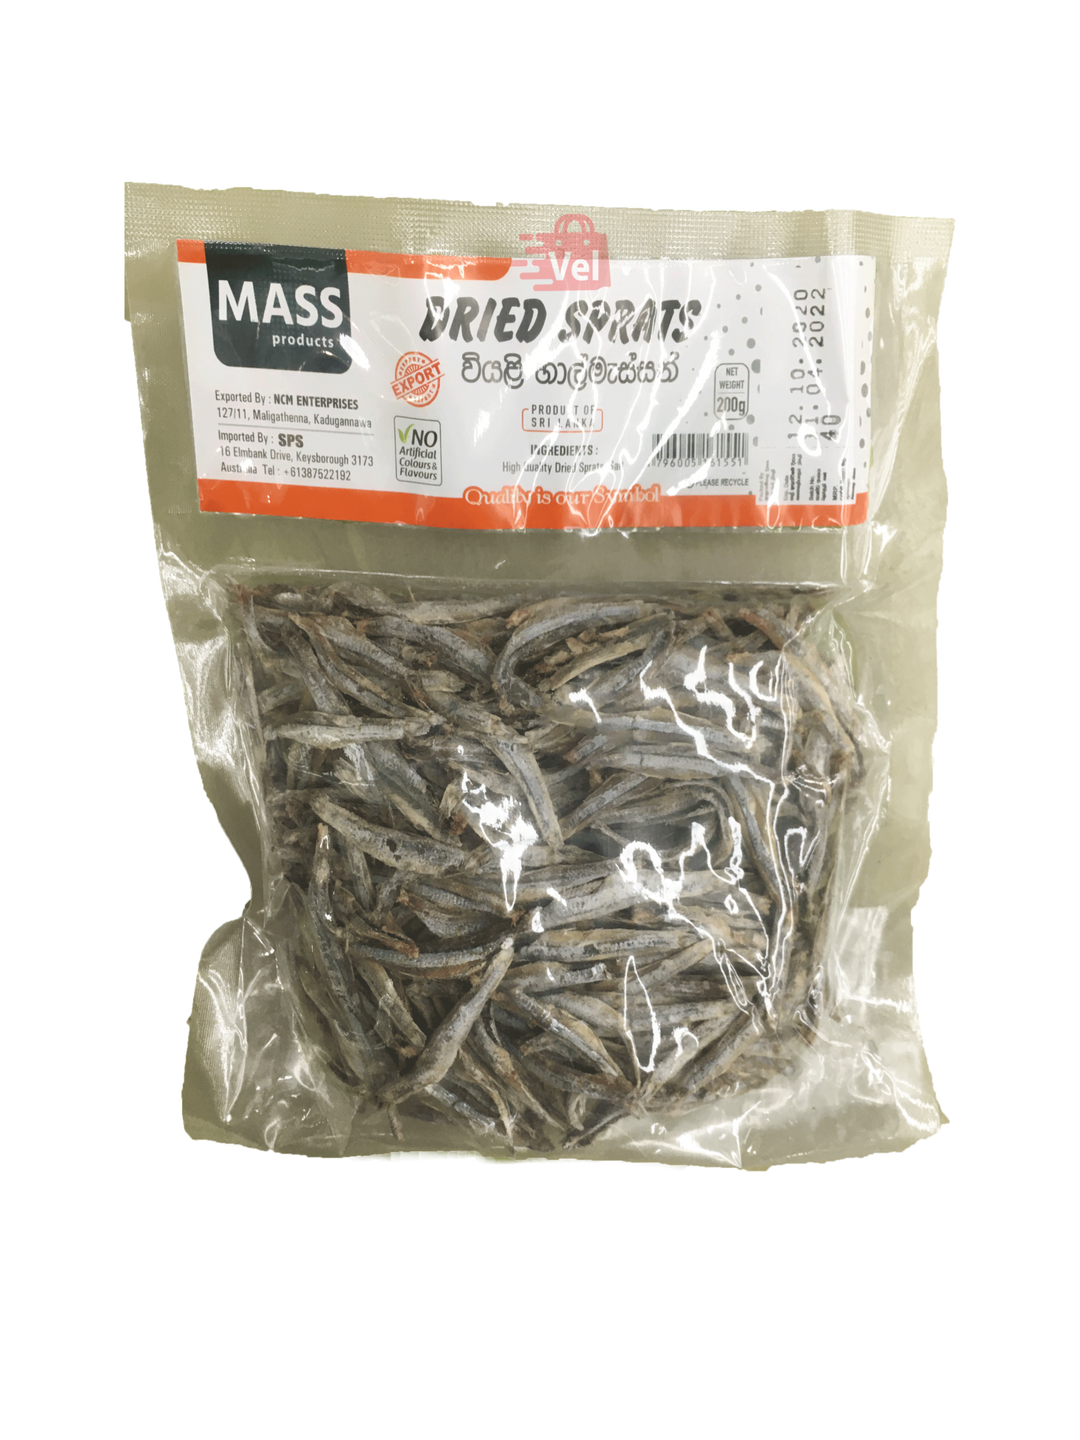 Mass Dried Sprats 200G